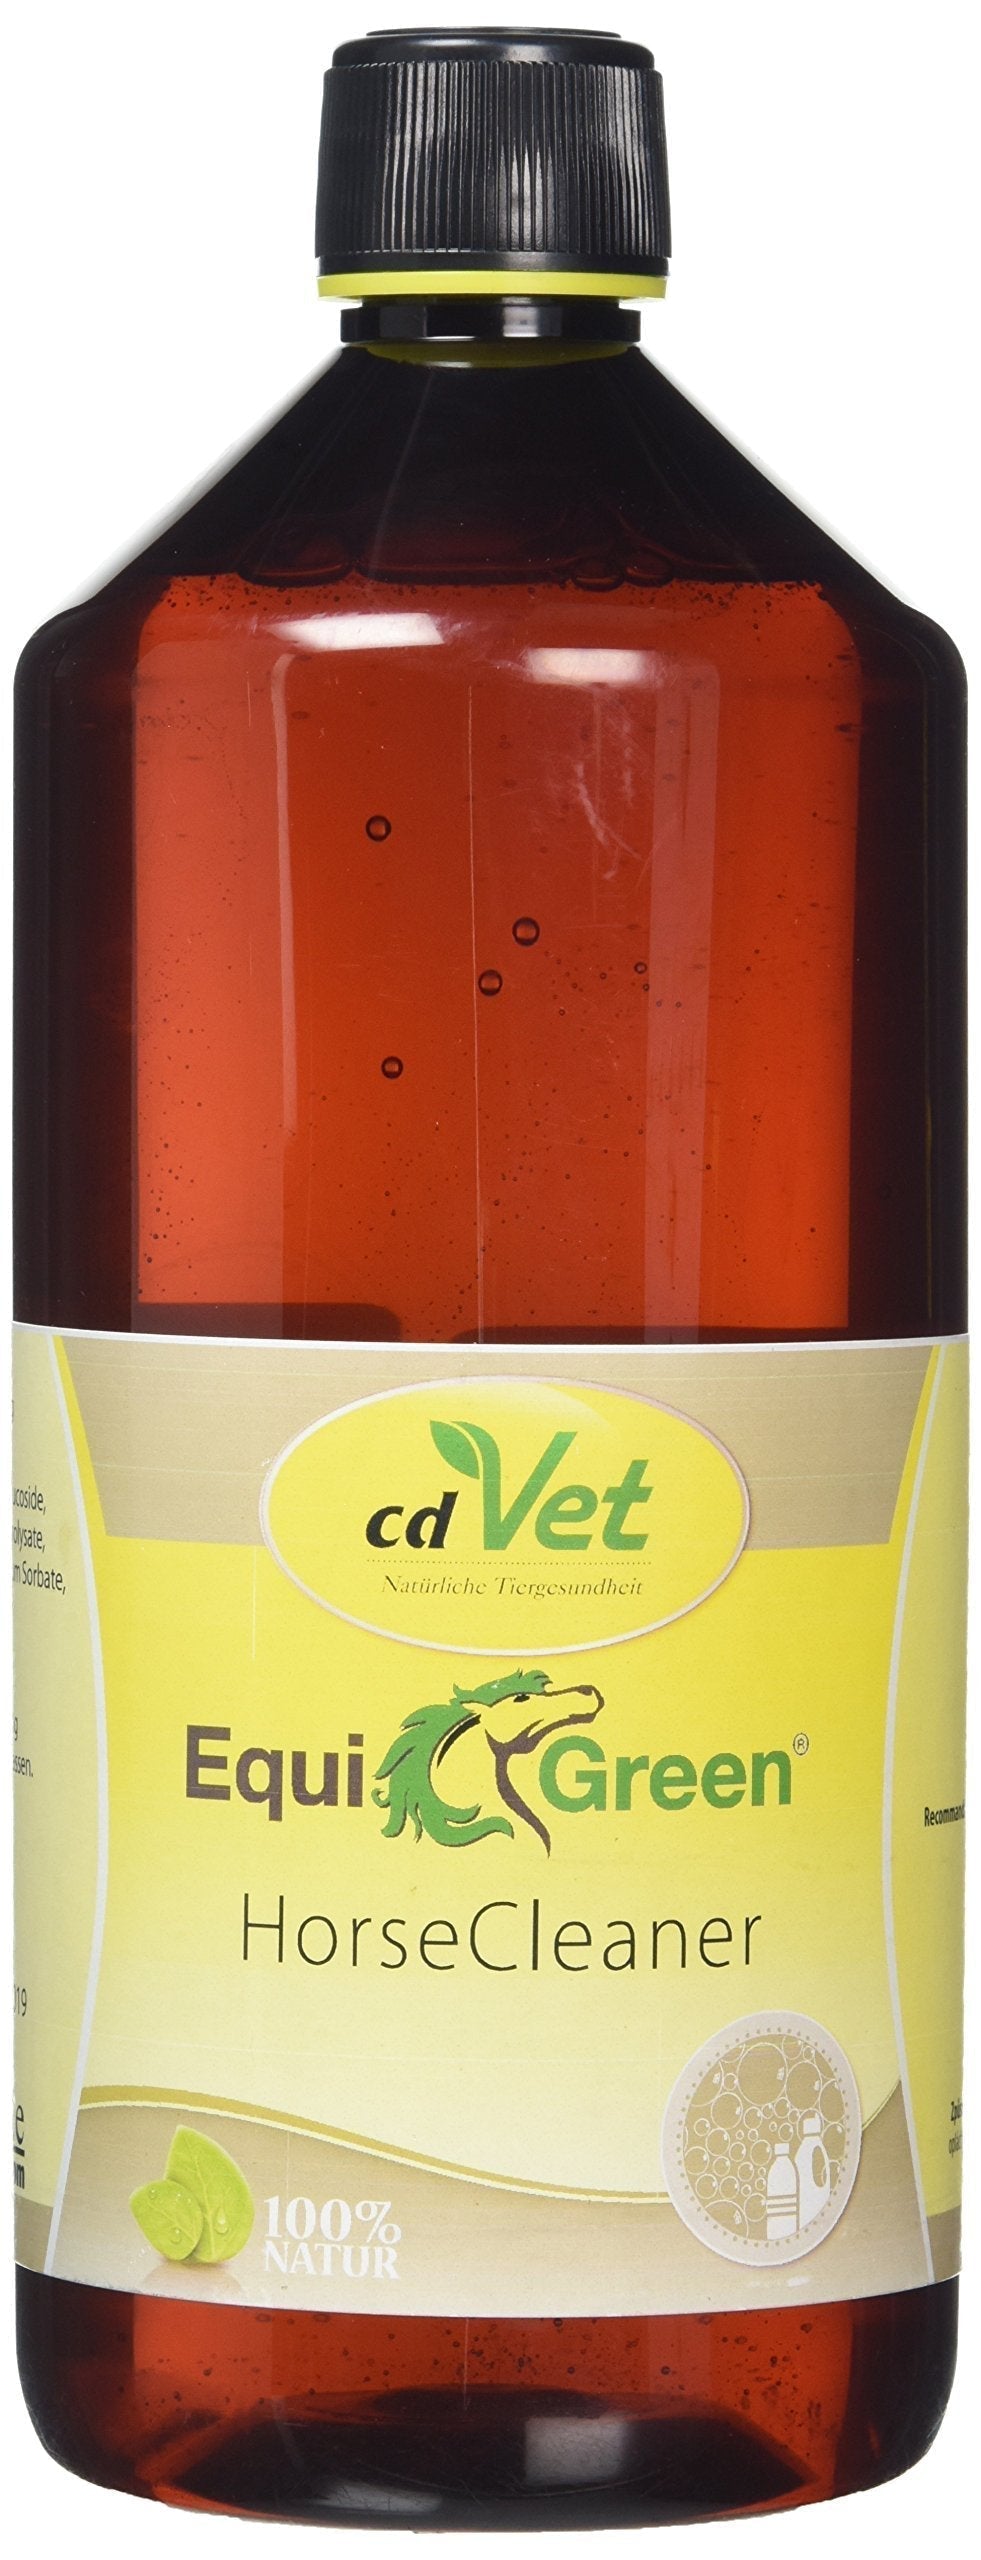 cdVet Naturprodukte EquiGreen HorseCleaner 1 Liter - Horses - pH-neutral care shampoo for sensitive skin - gives the coat shine + profoundly cleansed - prevents dandruff formation - 1000 ml - PawsPlanet Australia